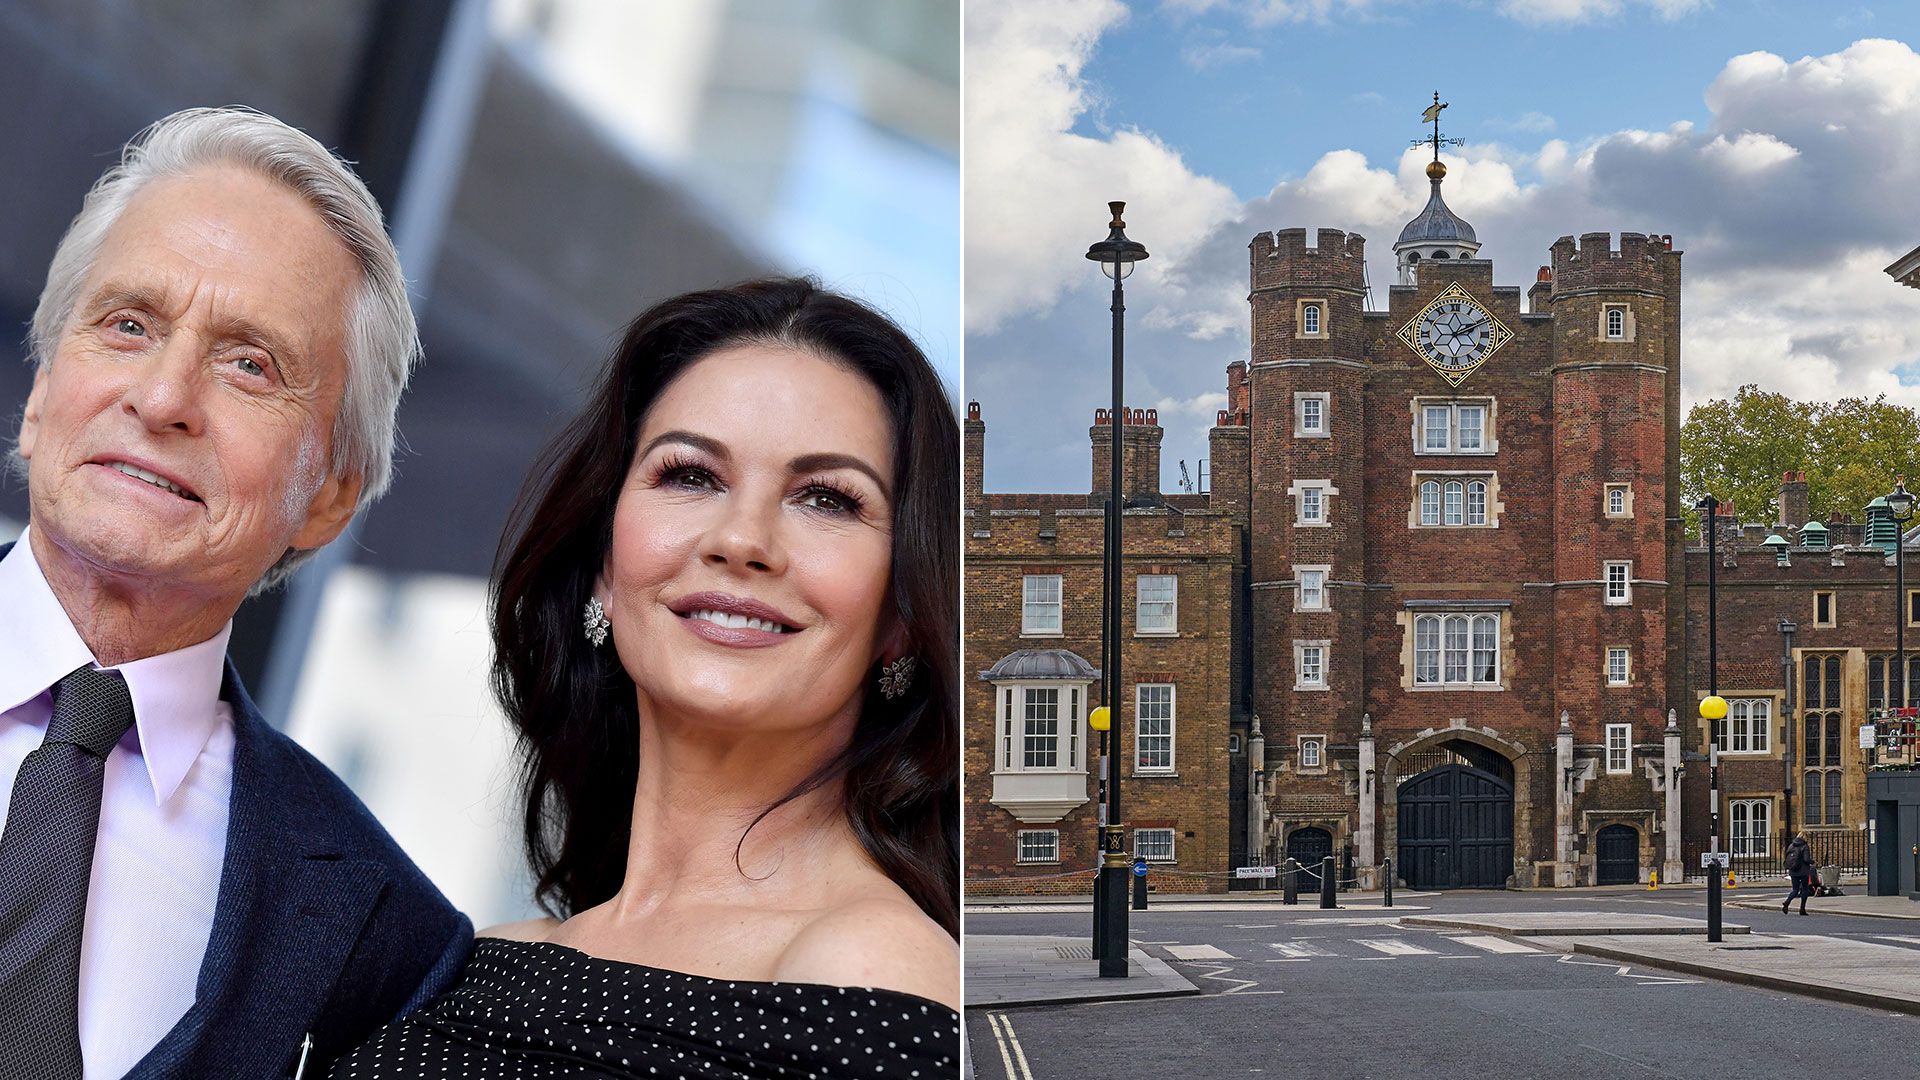 Catherine Zeta-Jones and Michael Douglas' secret London residence fit for Hollywood royalty